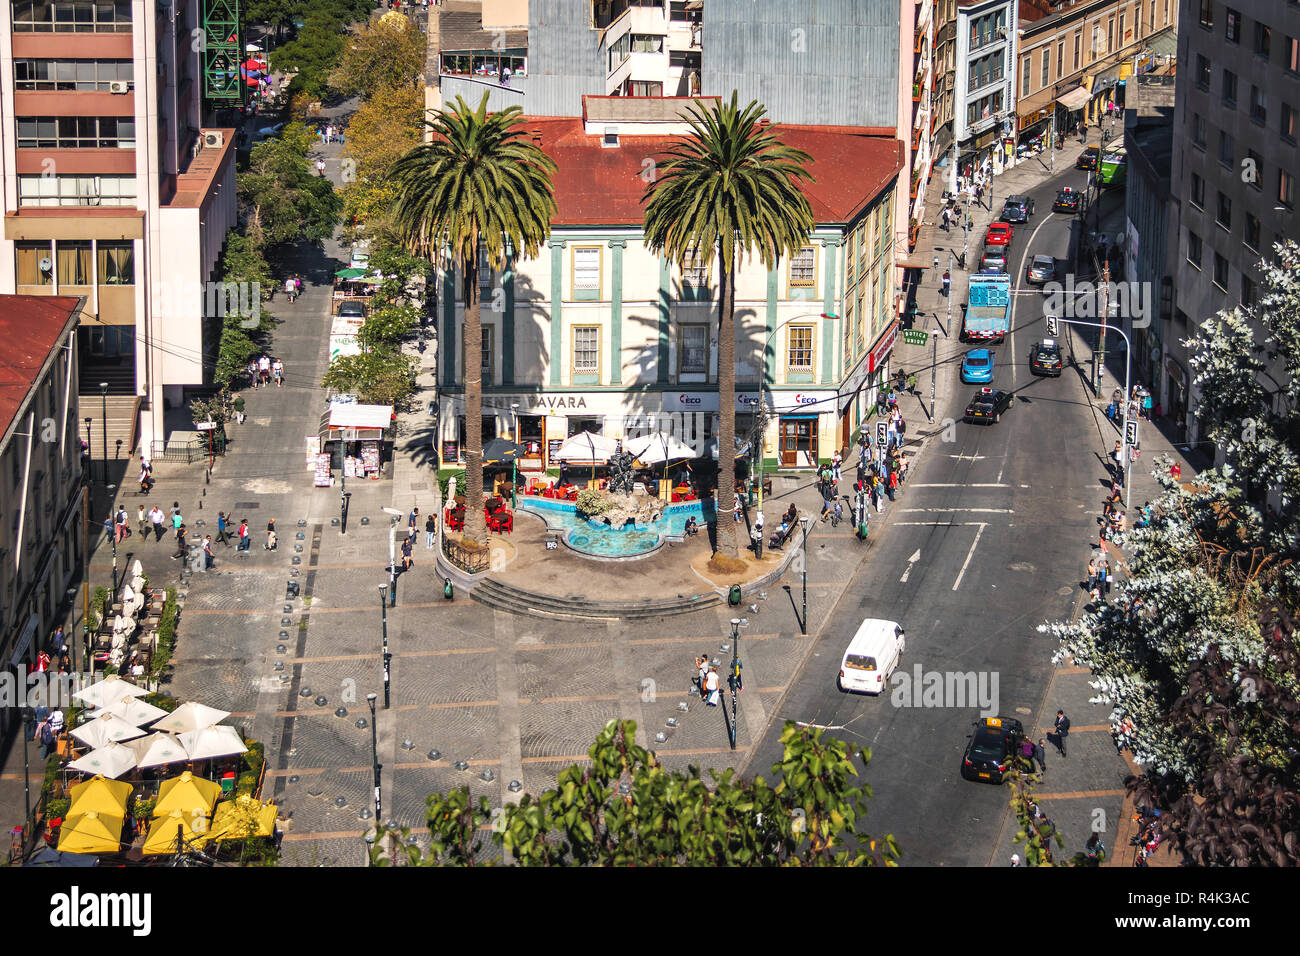 Aerial view of Plaza Anibal Pinto Square - Valparaiso, Chile Stock Photo